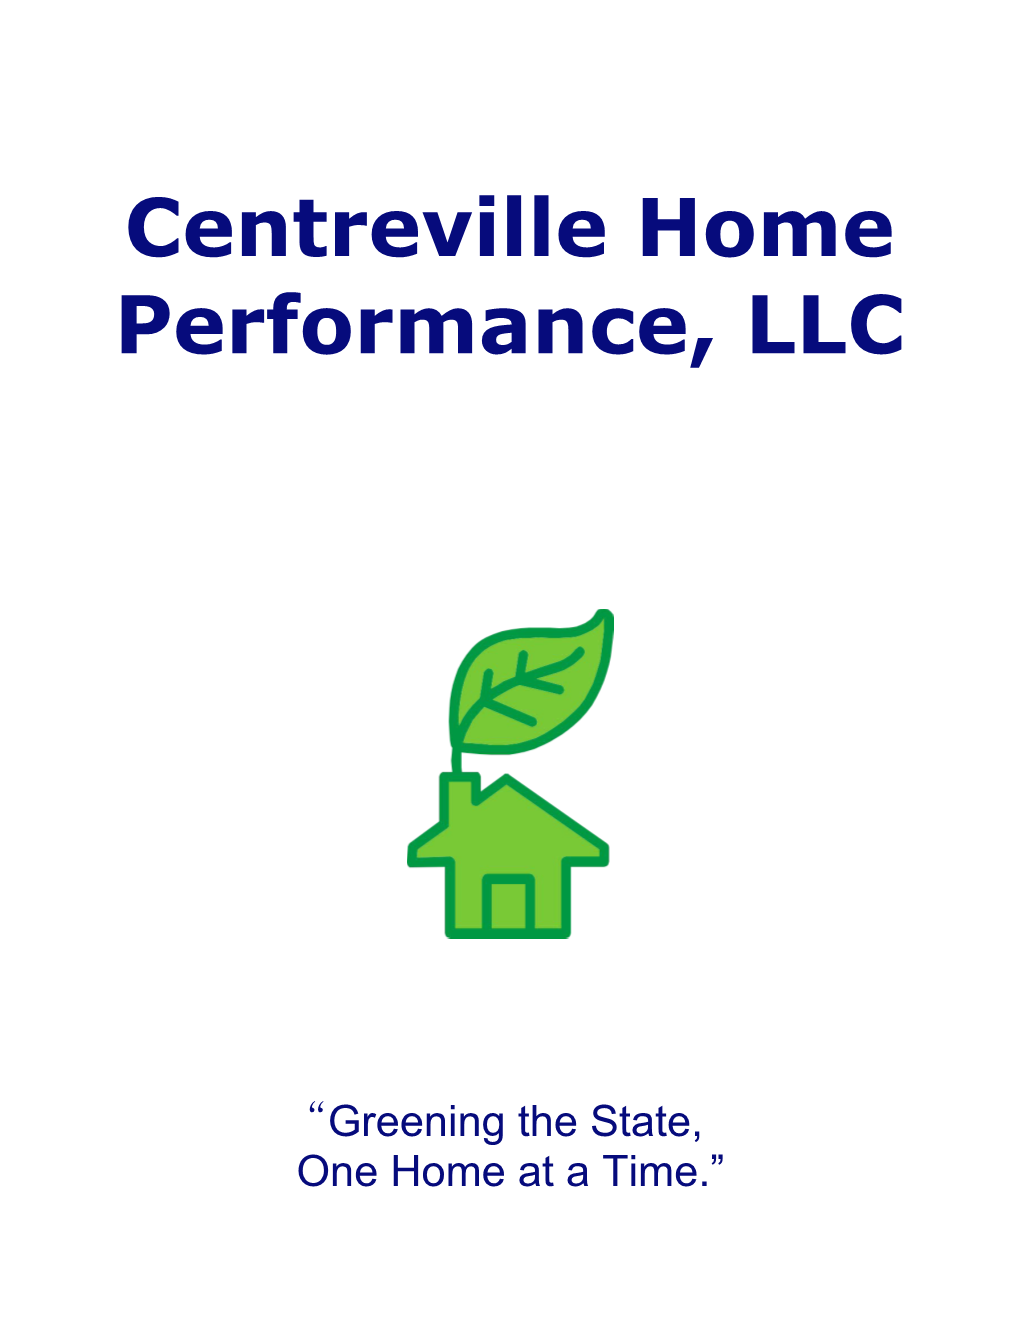 Centreville Home Performance, LLC